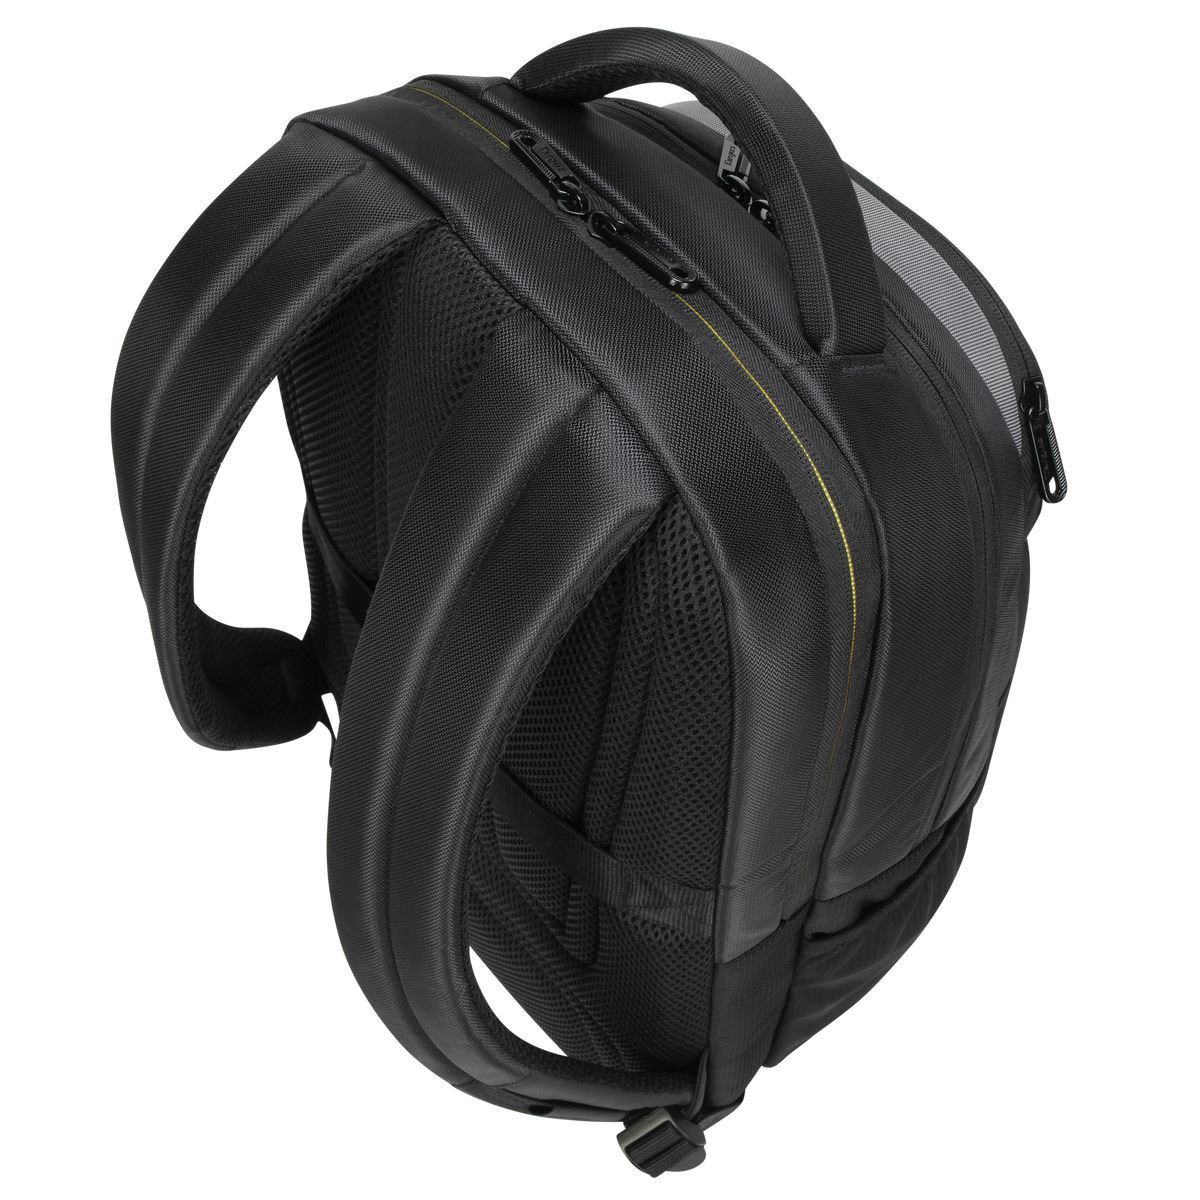 Targus City Gear 3 backpack Polyurethane Black